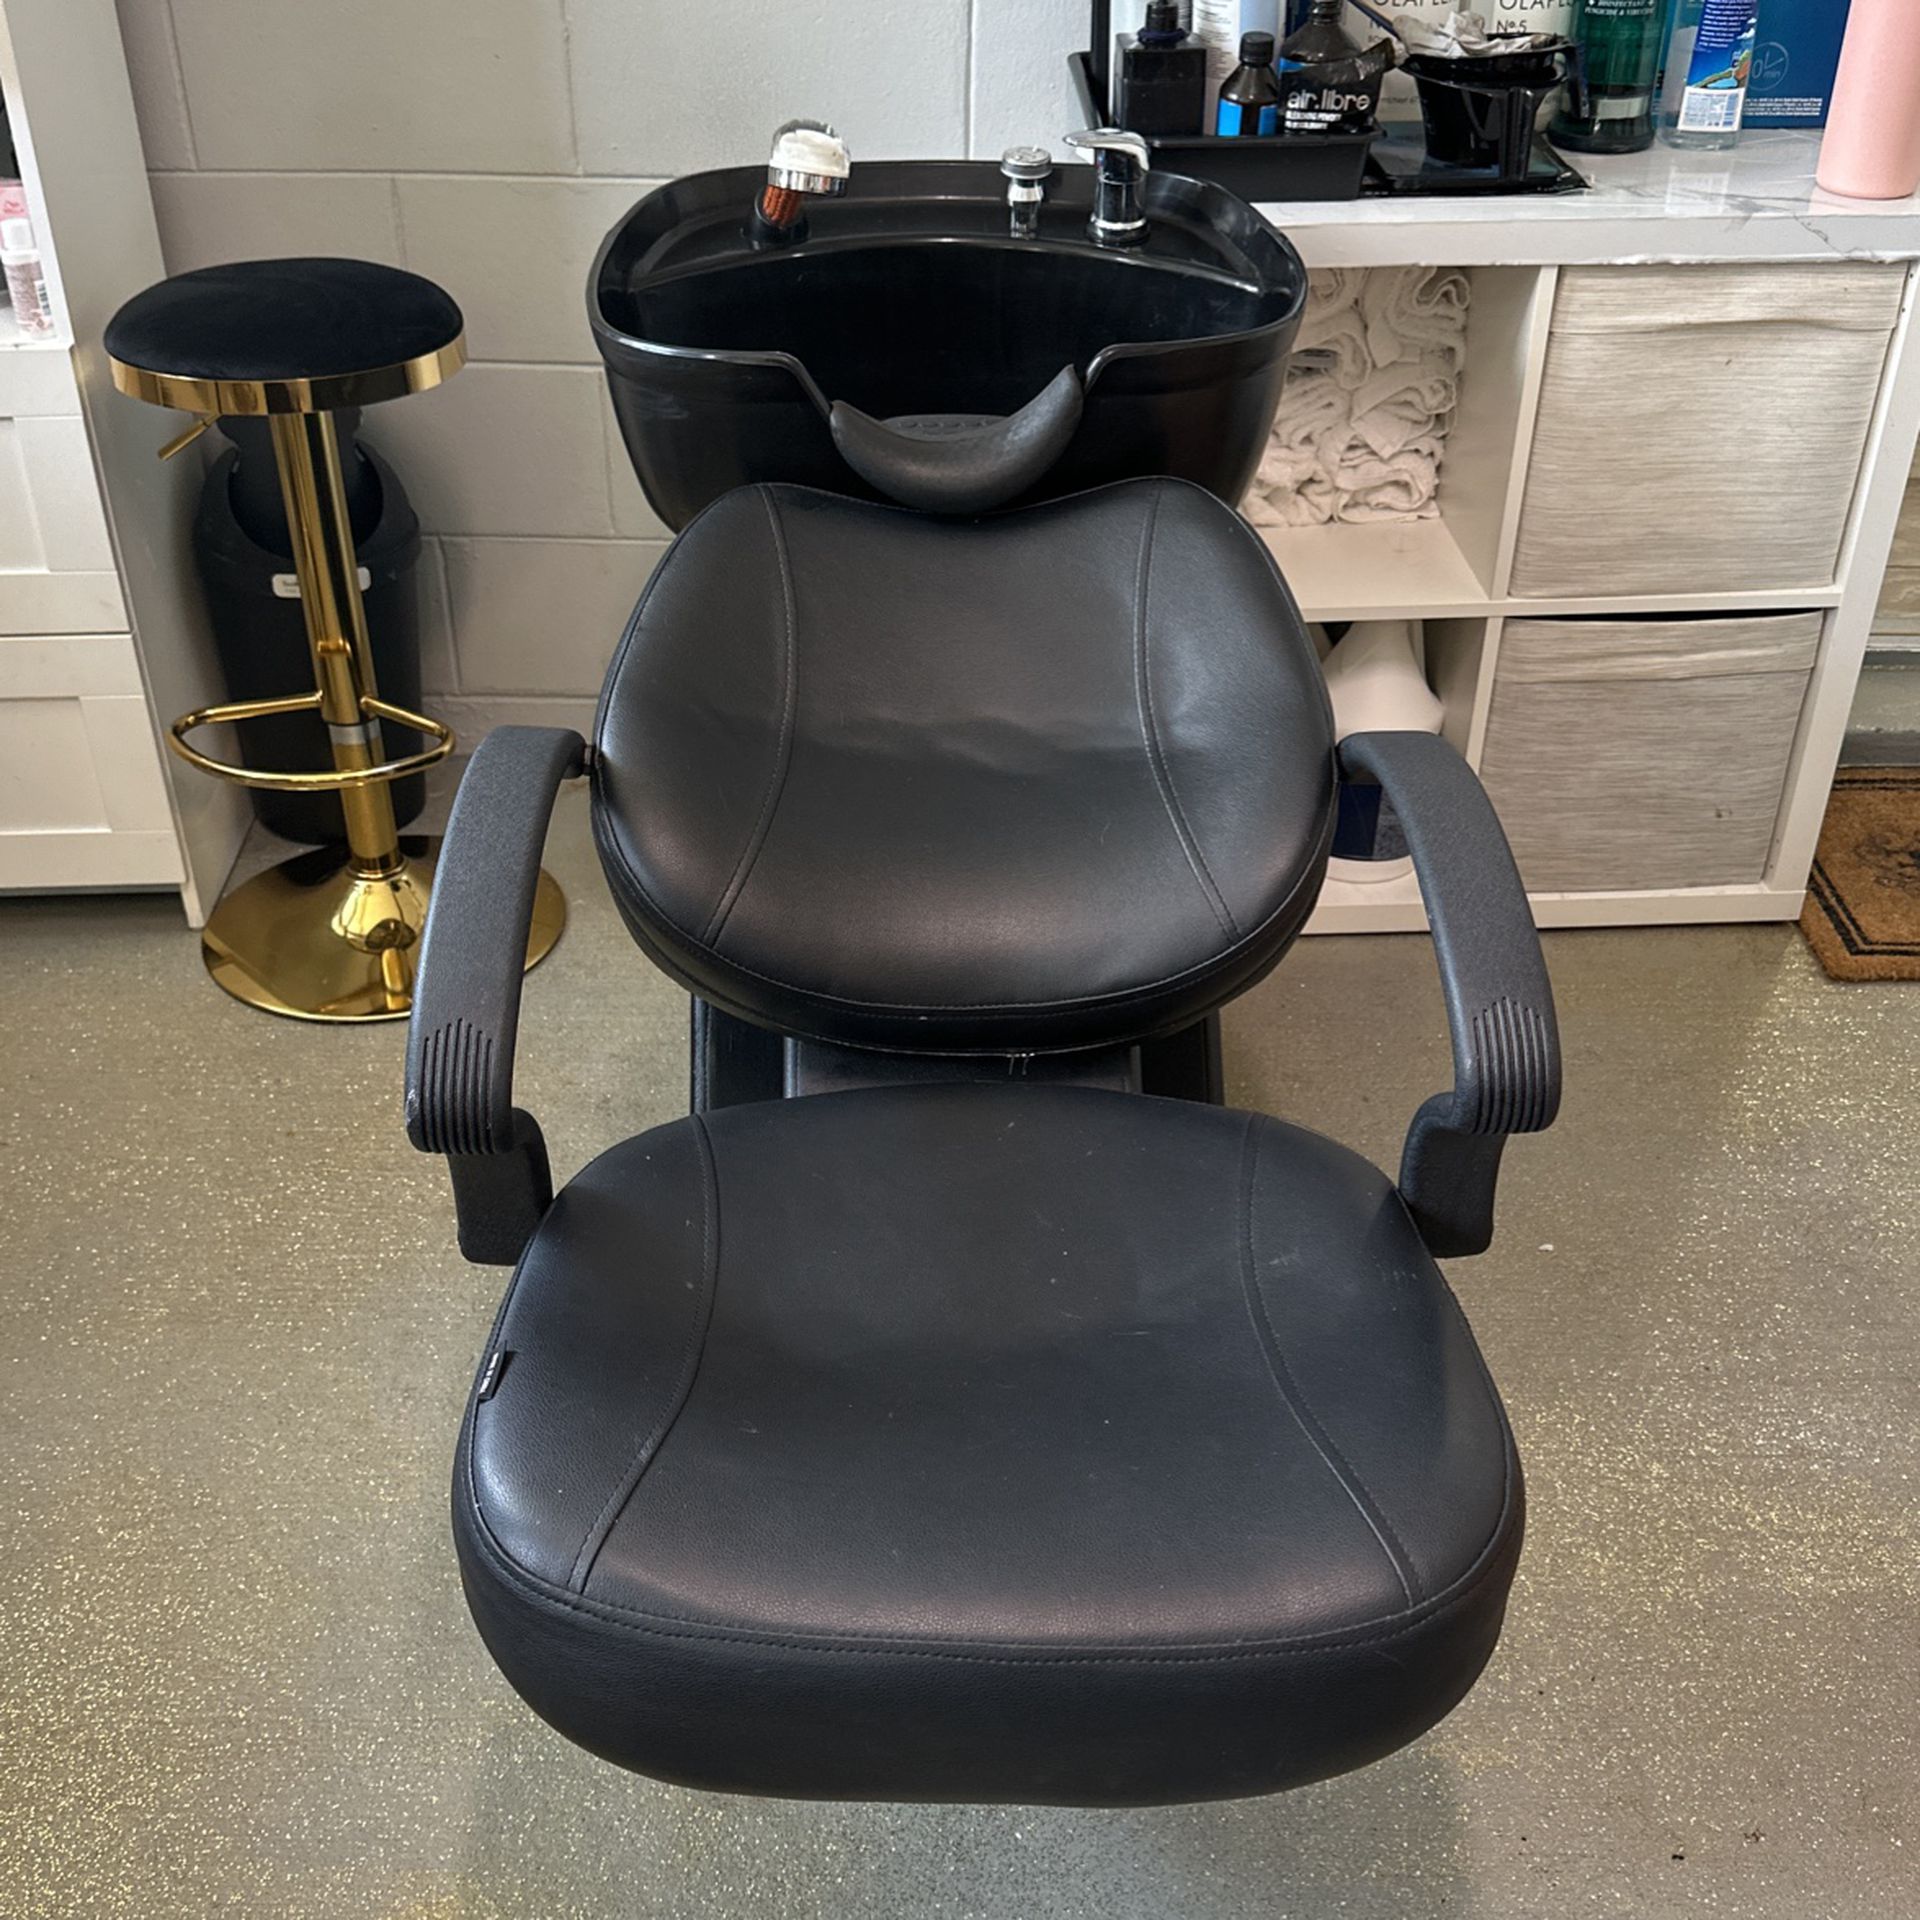 BarberPub Ceramic Bowl Shampoo Barber Chair Backwash Sink Barber Chair for Beauty Salon Spa Unit Station 9020